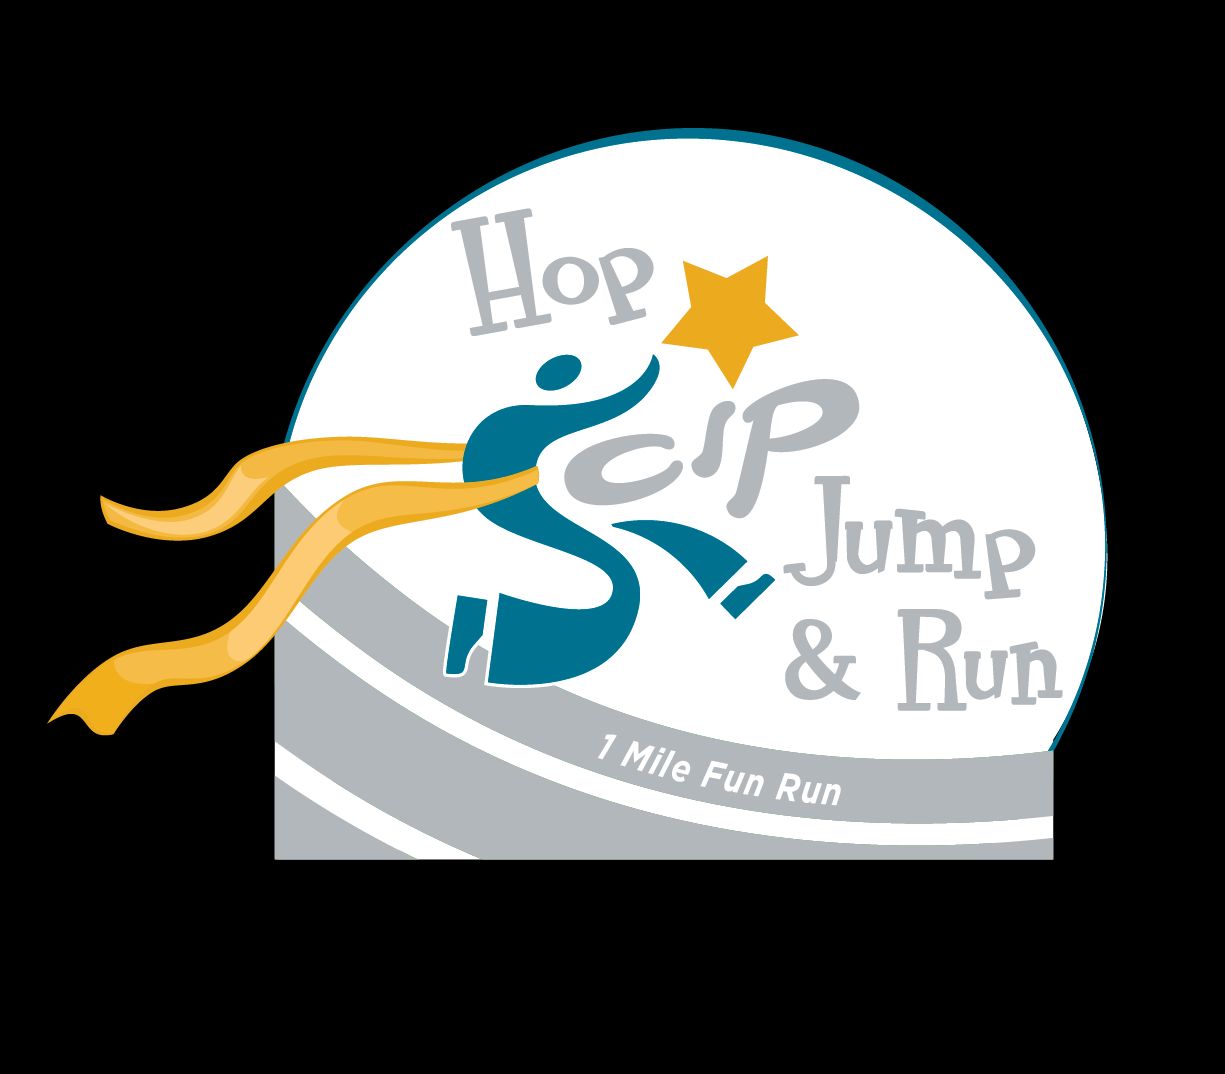 "Hop, SCIP, Jump and Run", Lincoln, Nebraska, United States